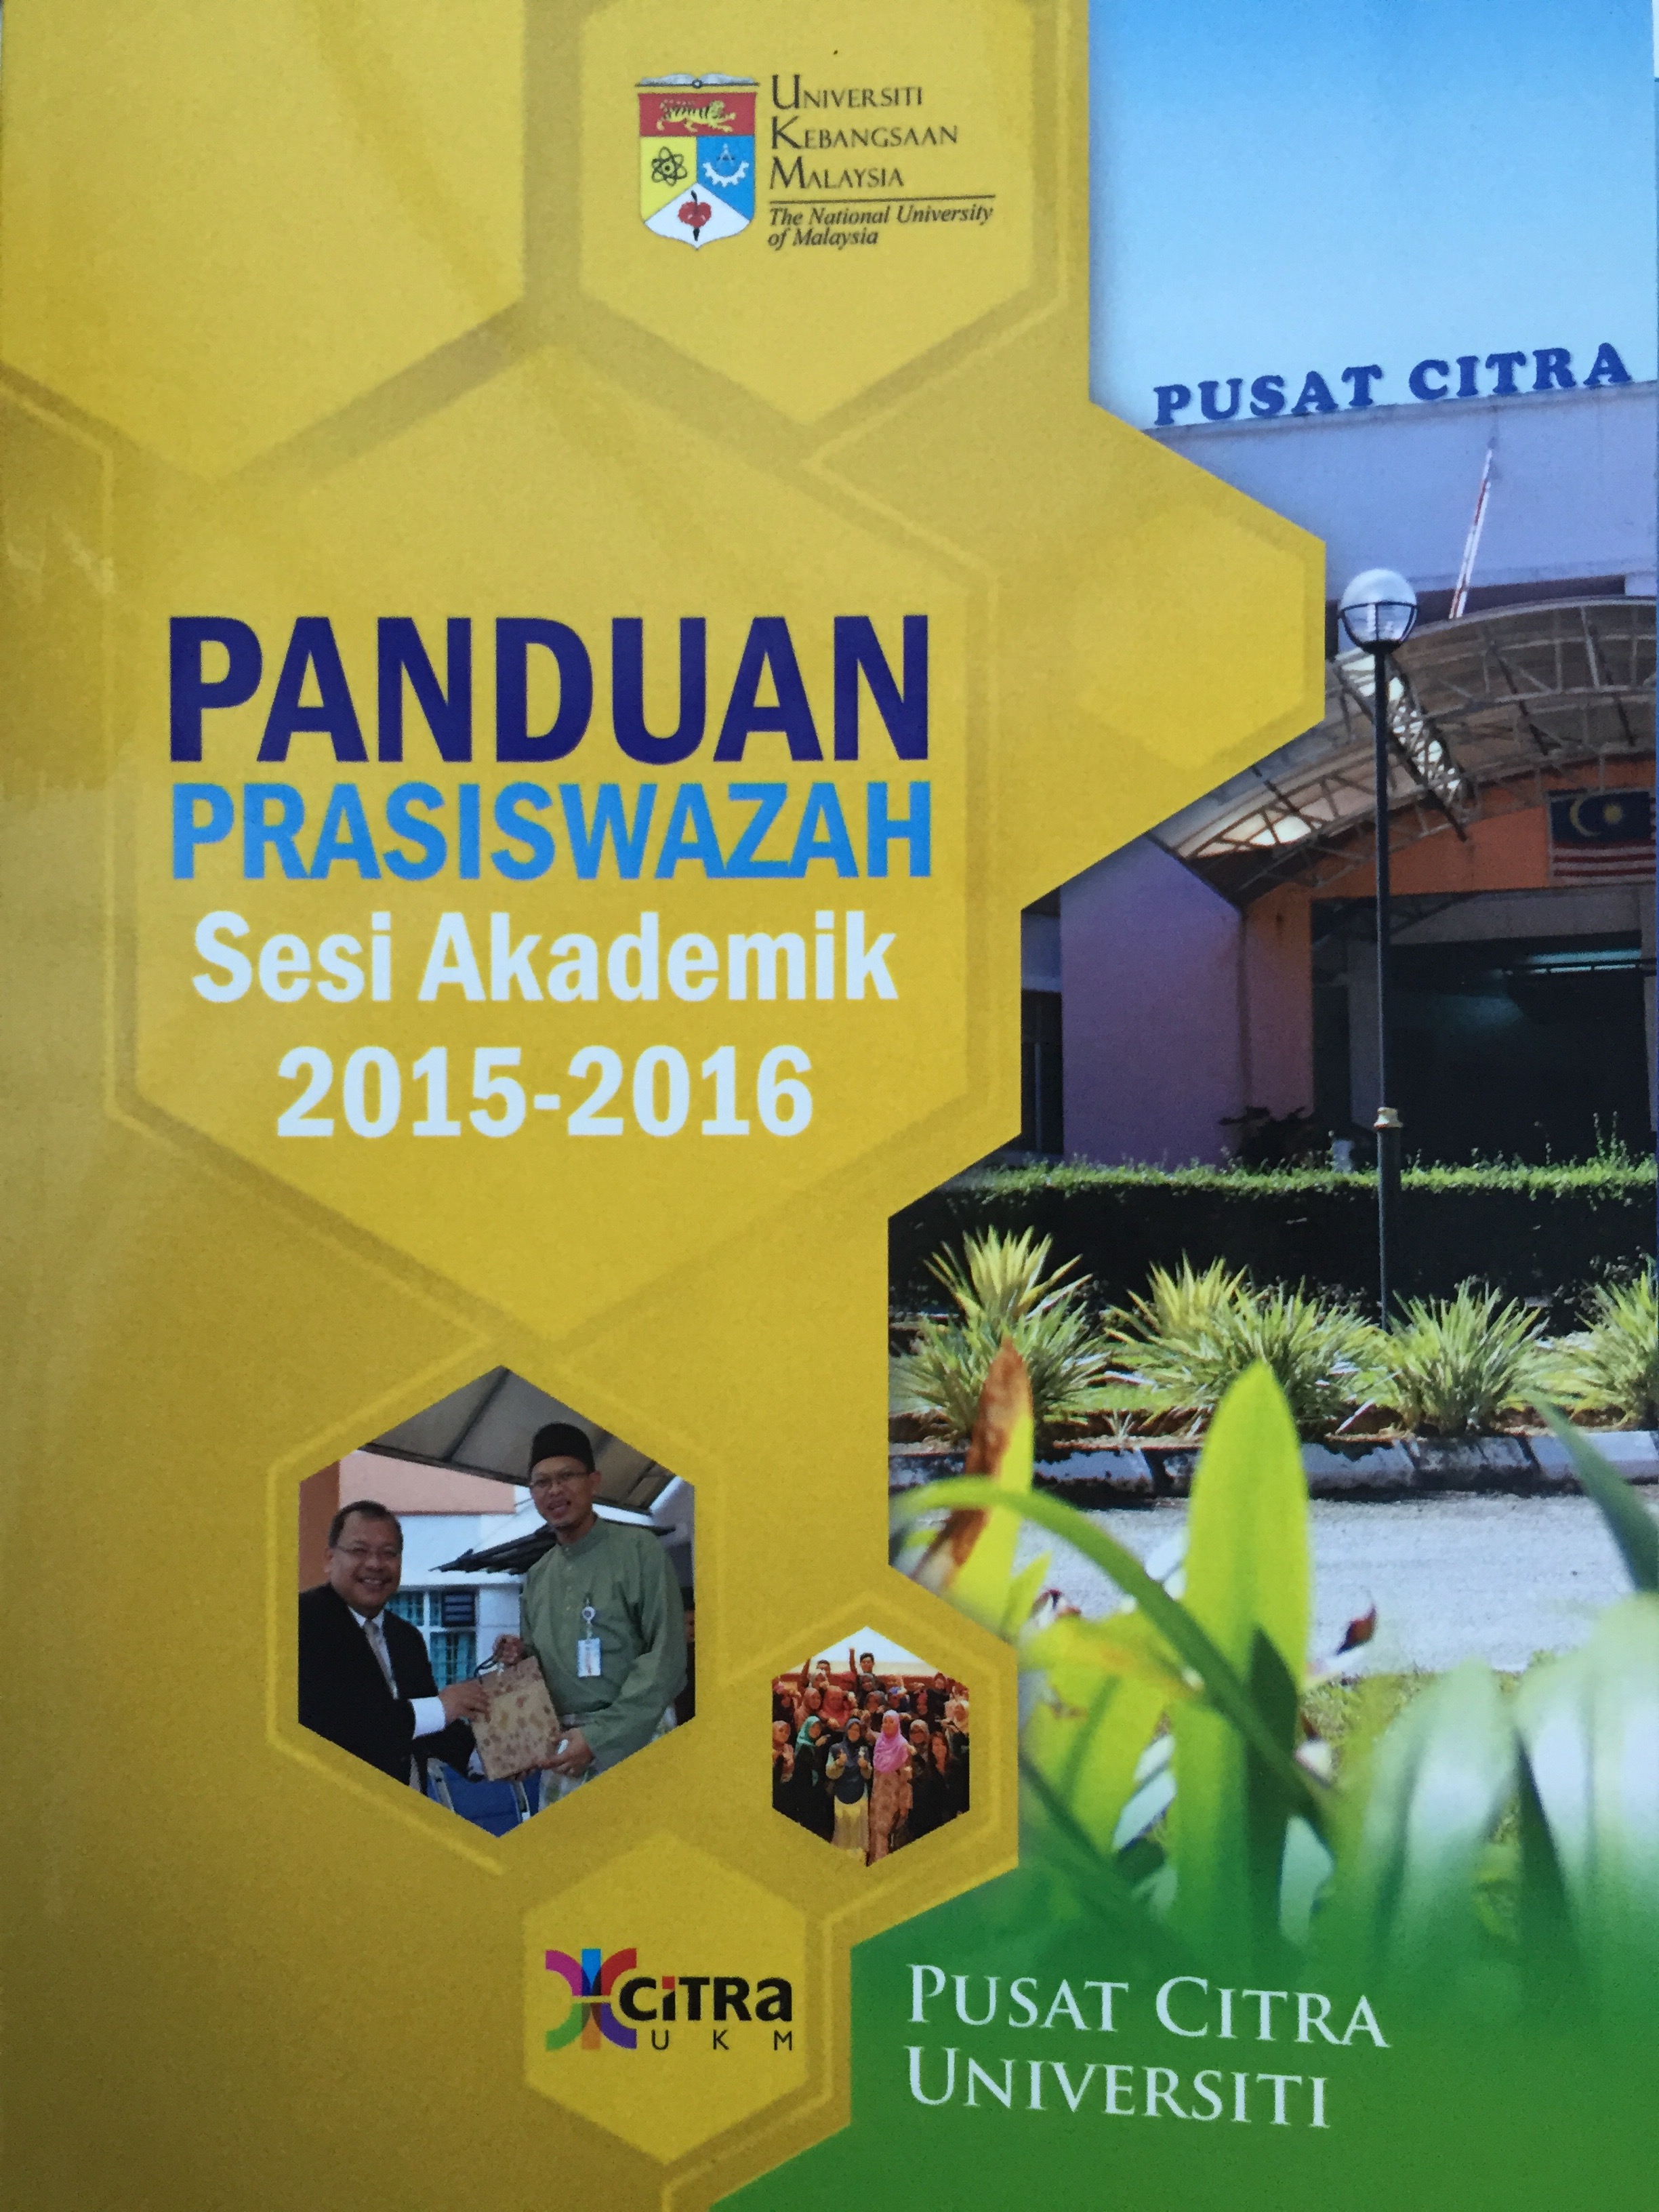 BUKU PANDUAN PRASISWAZAH PUSAT CITRA UNIVERSITI SESI AKADEMIK 2015-2016